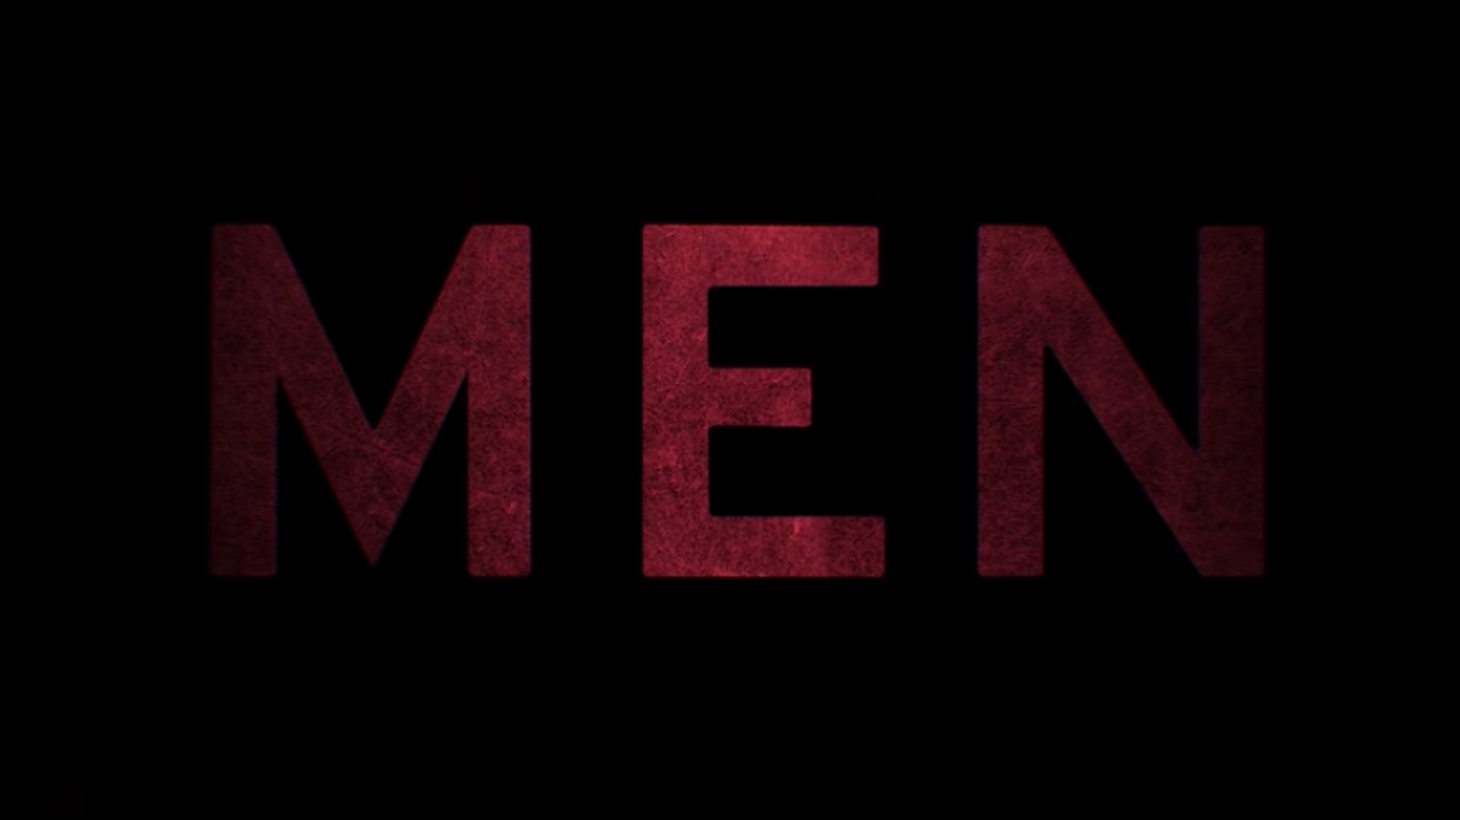 Jessie Buckley, Rory Kinnear, and Paapa Essiedu star in the horror film “Men.”